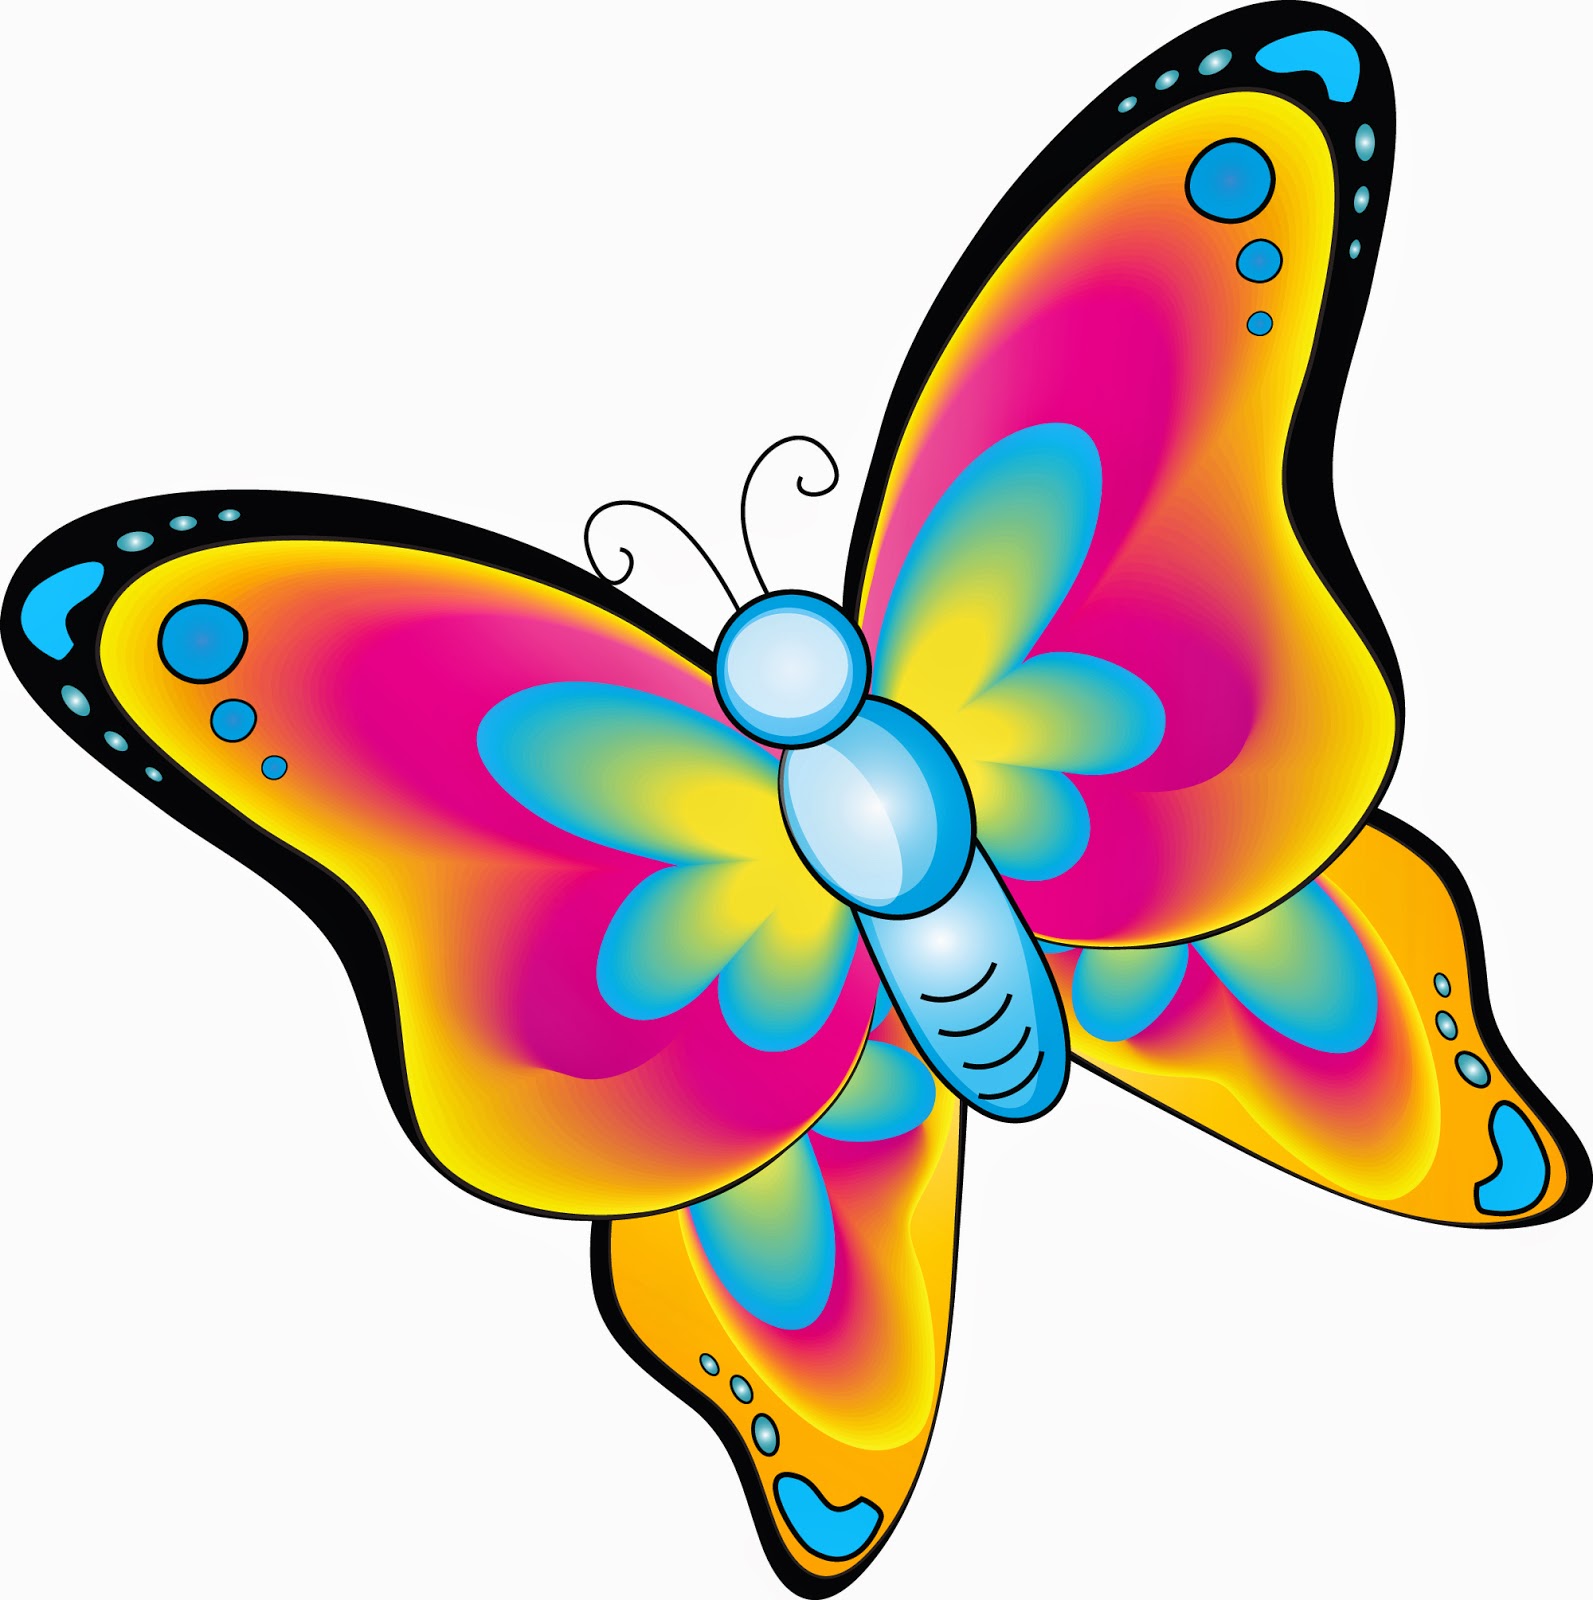  Gambar  Kupu  kupu  yang lucu  TokoFauzia